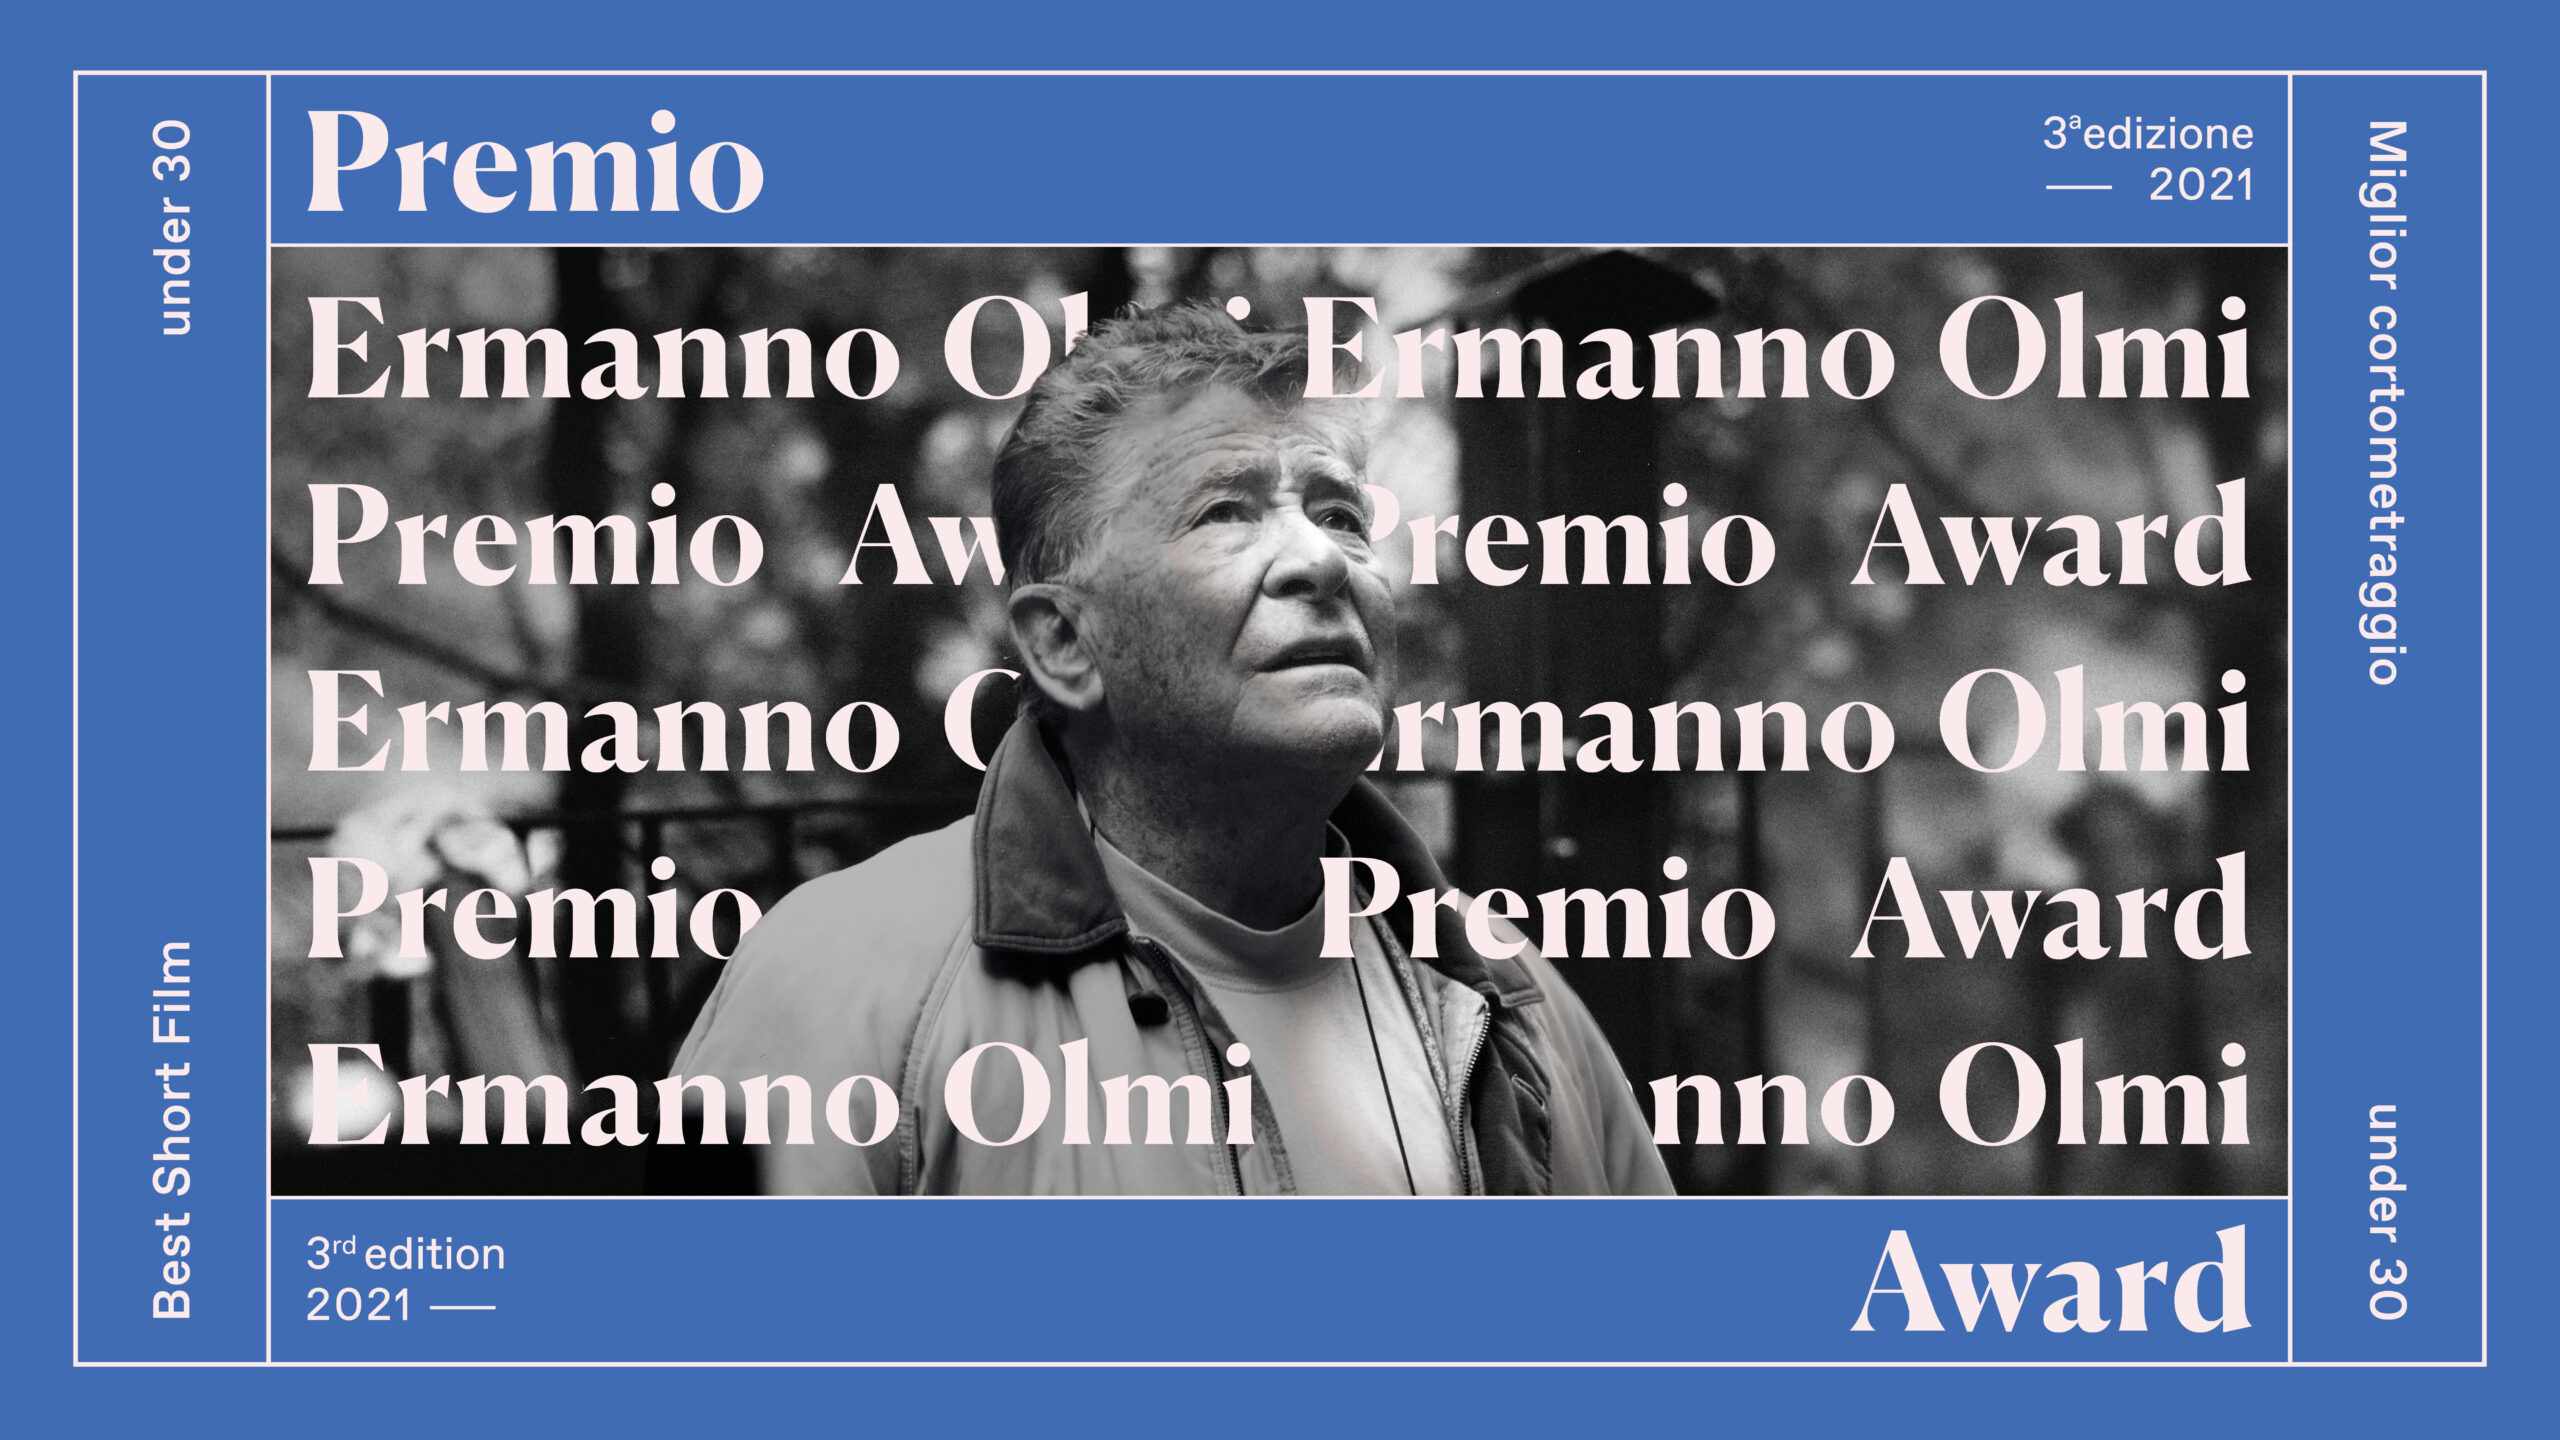 Ermanno Olmi Prize – 3rd Edition